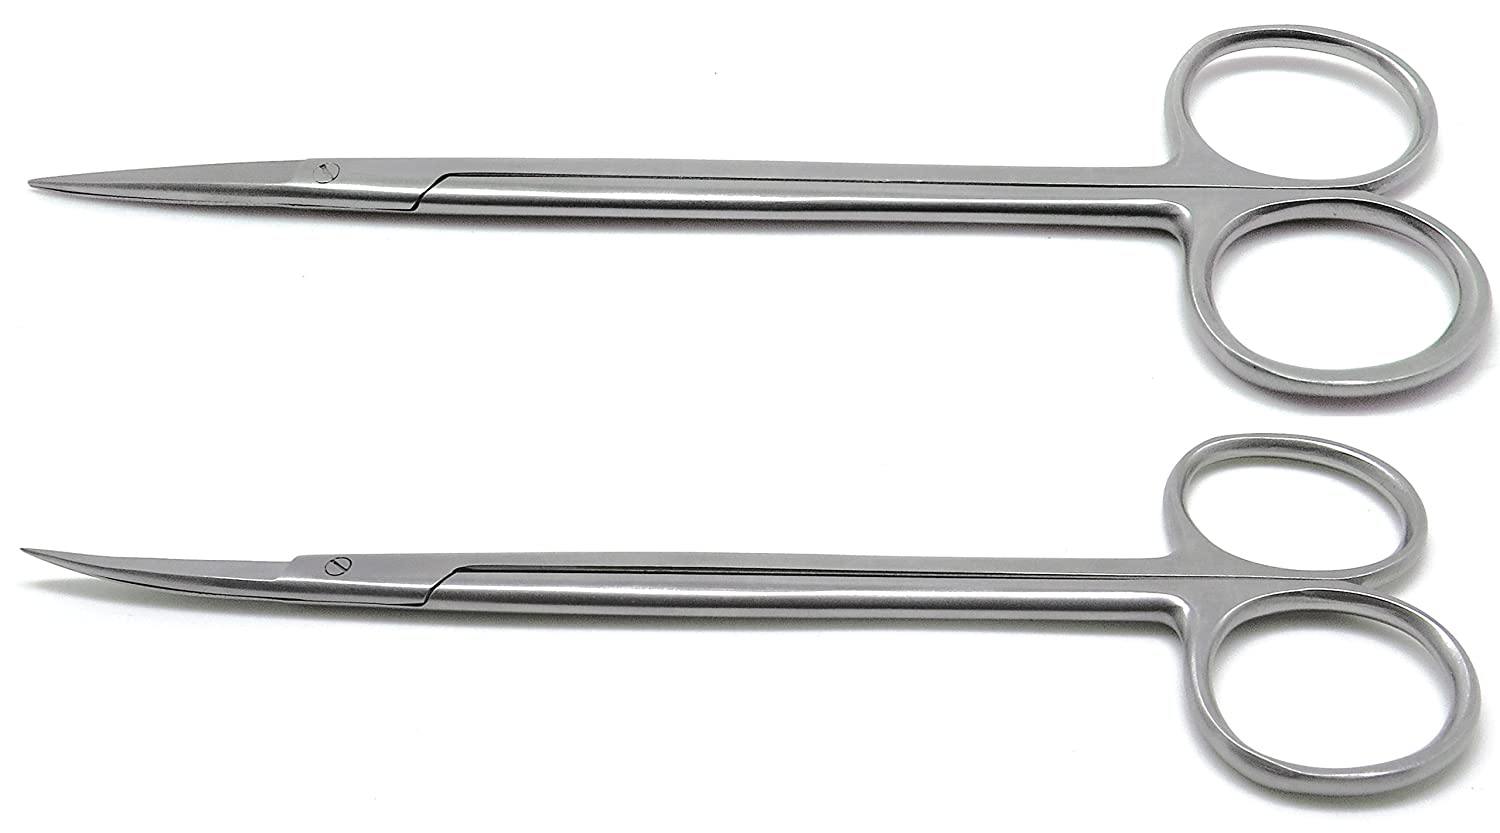 Iris Scissors, 4.5 Curved, Stainless Steel MacBlack Series